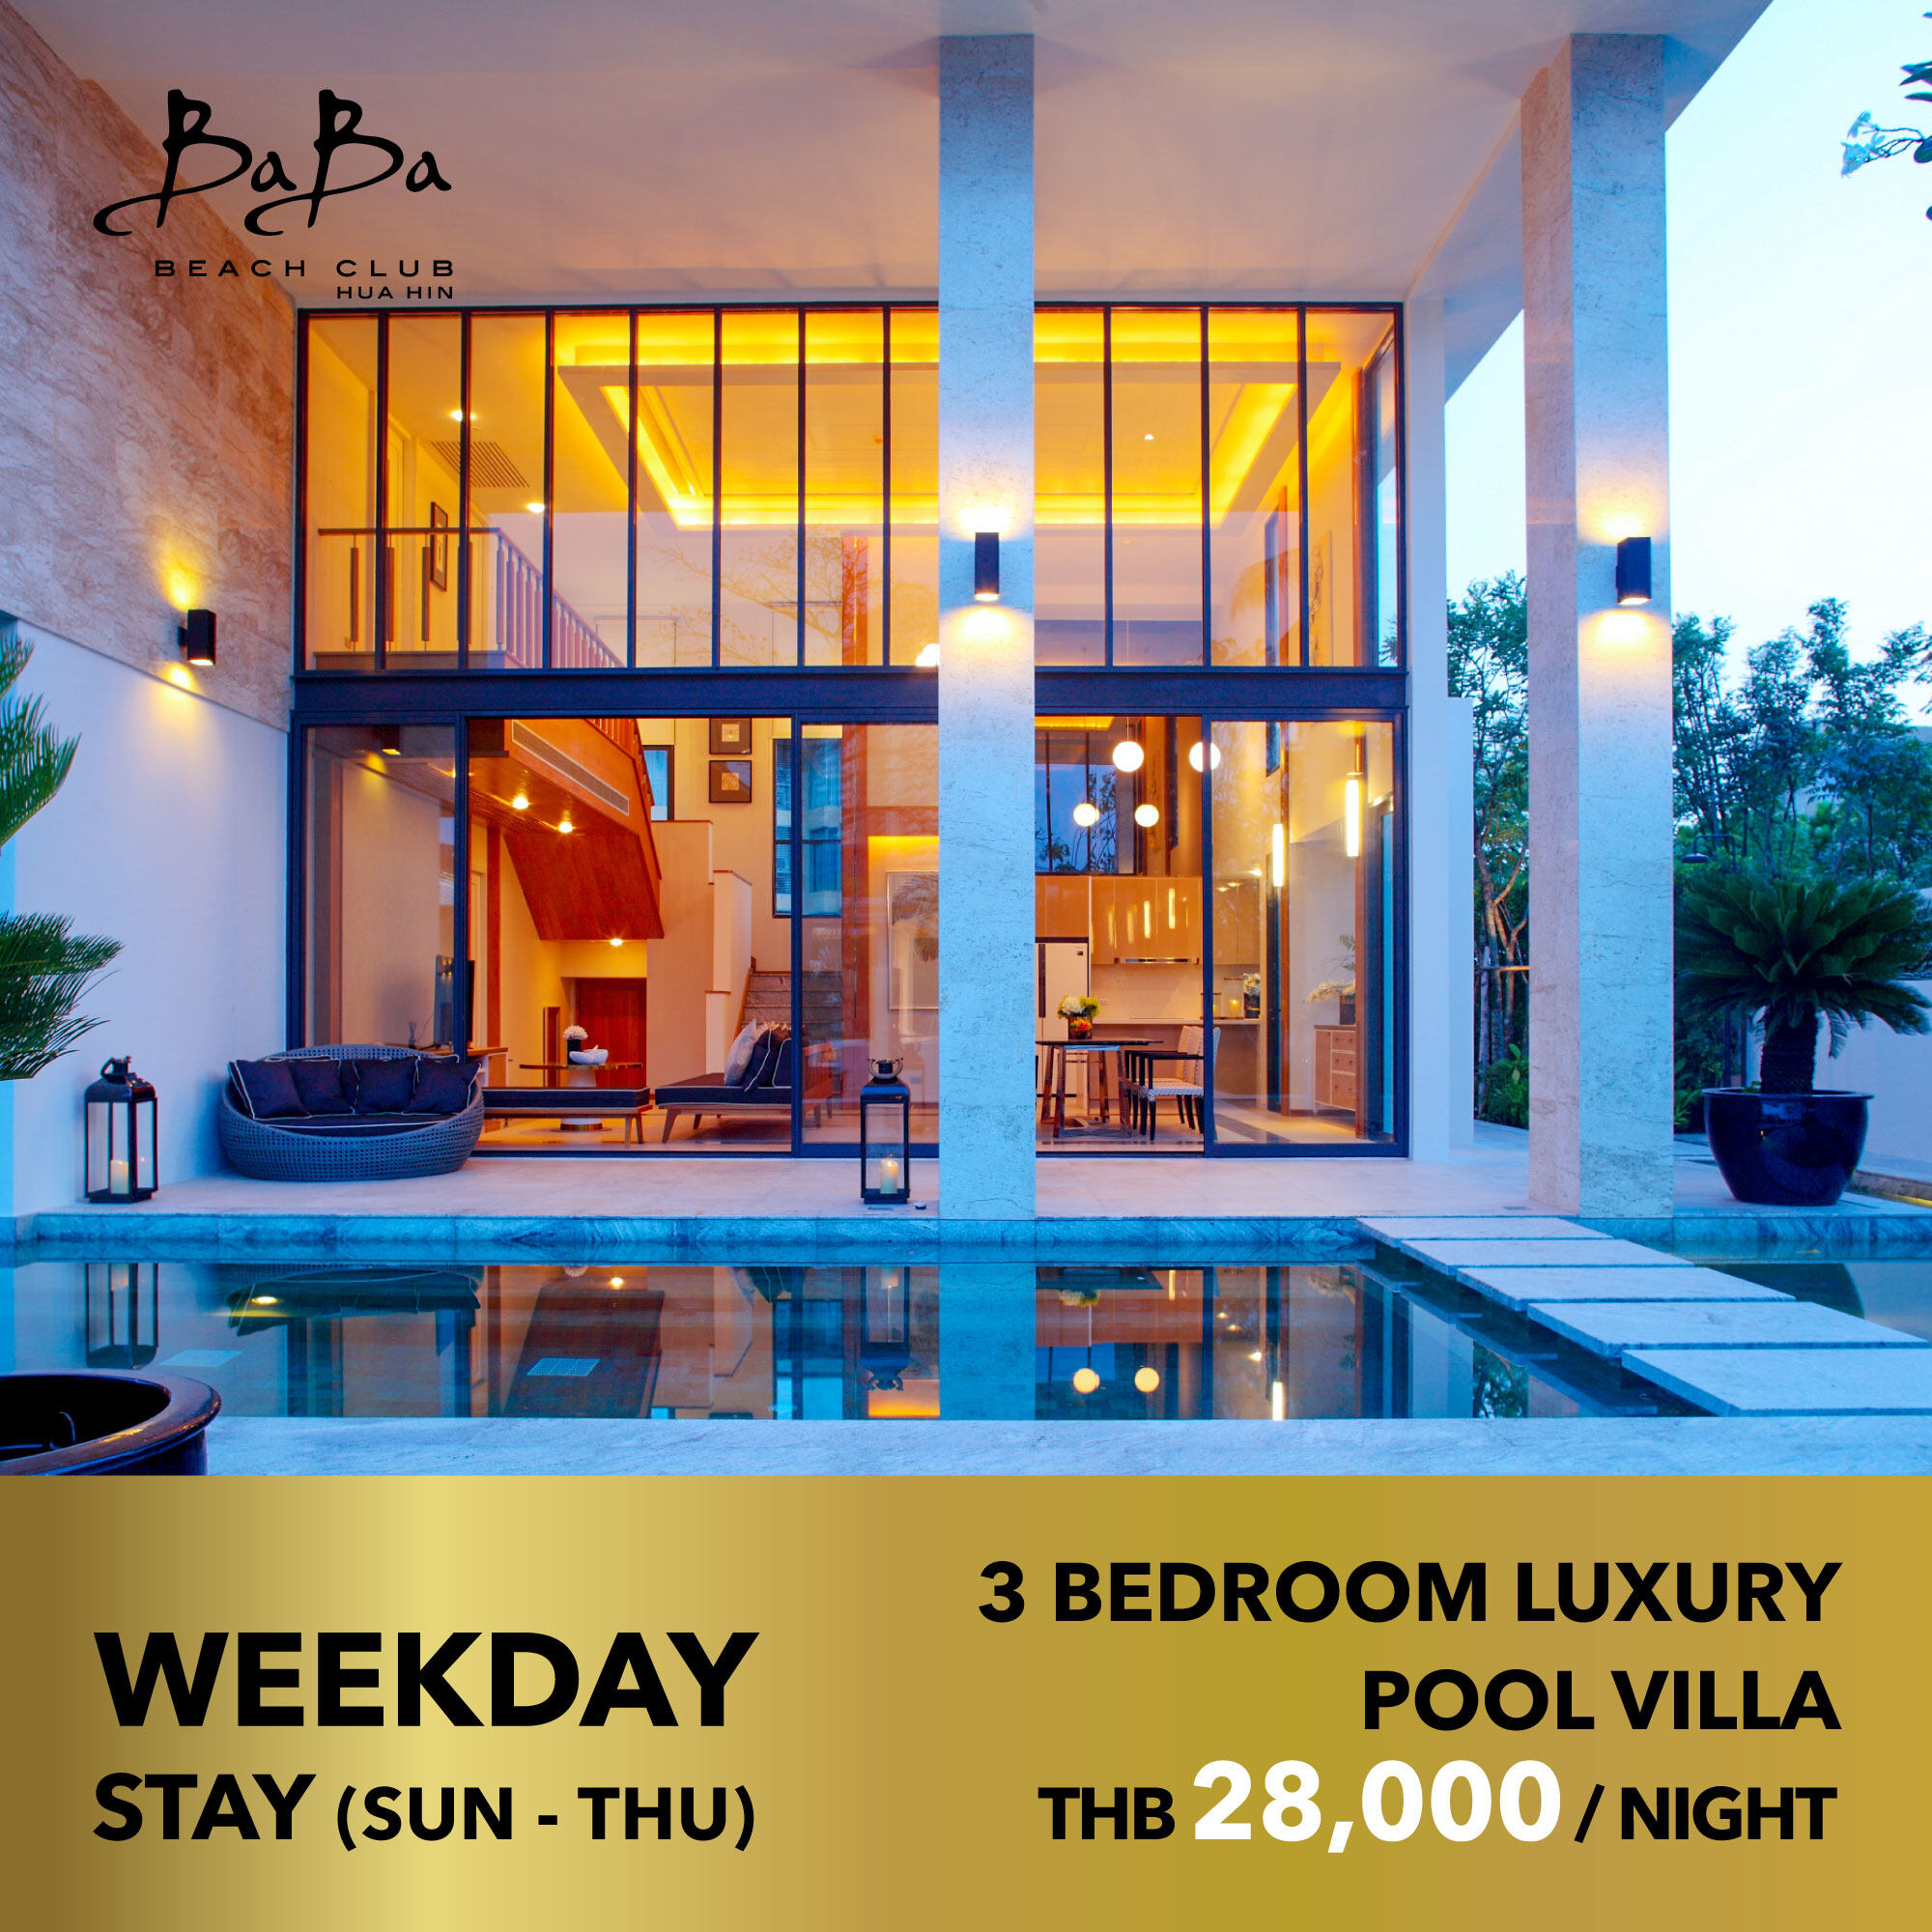 Baba Beach Club Hua Hin Luxury Pool Villa Hotel - ห้อง 3 Bedroom Luxury Pool Villa 1 คืน